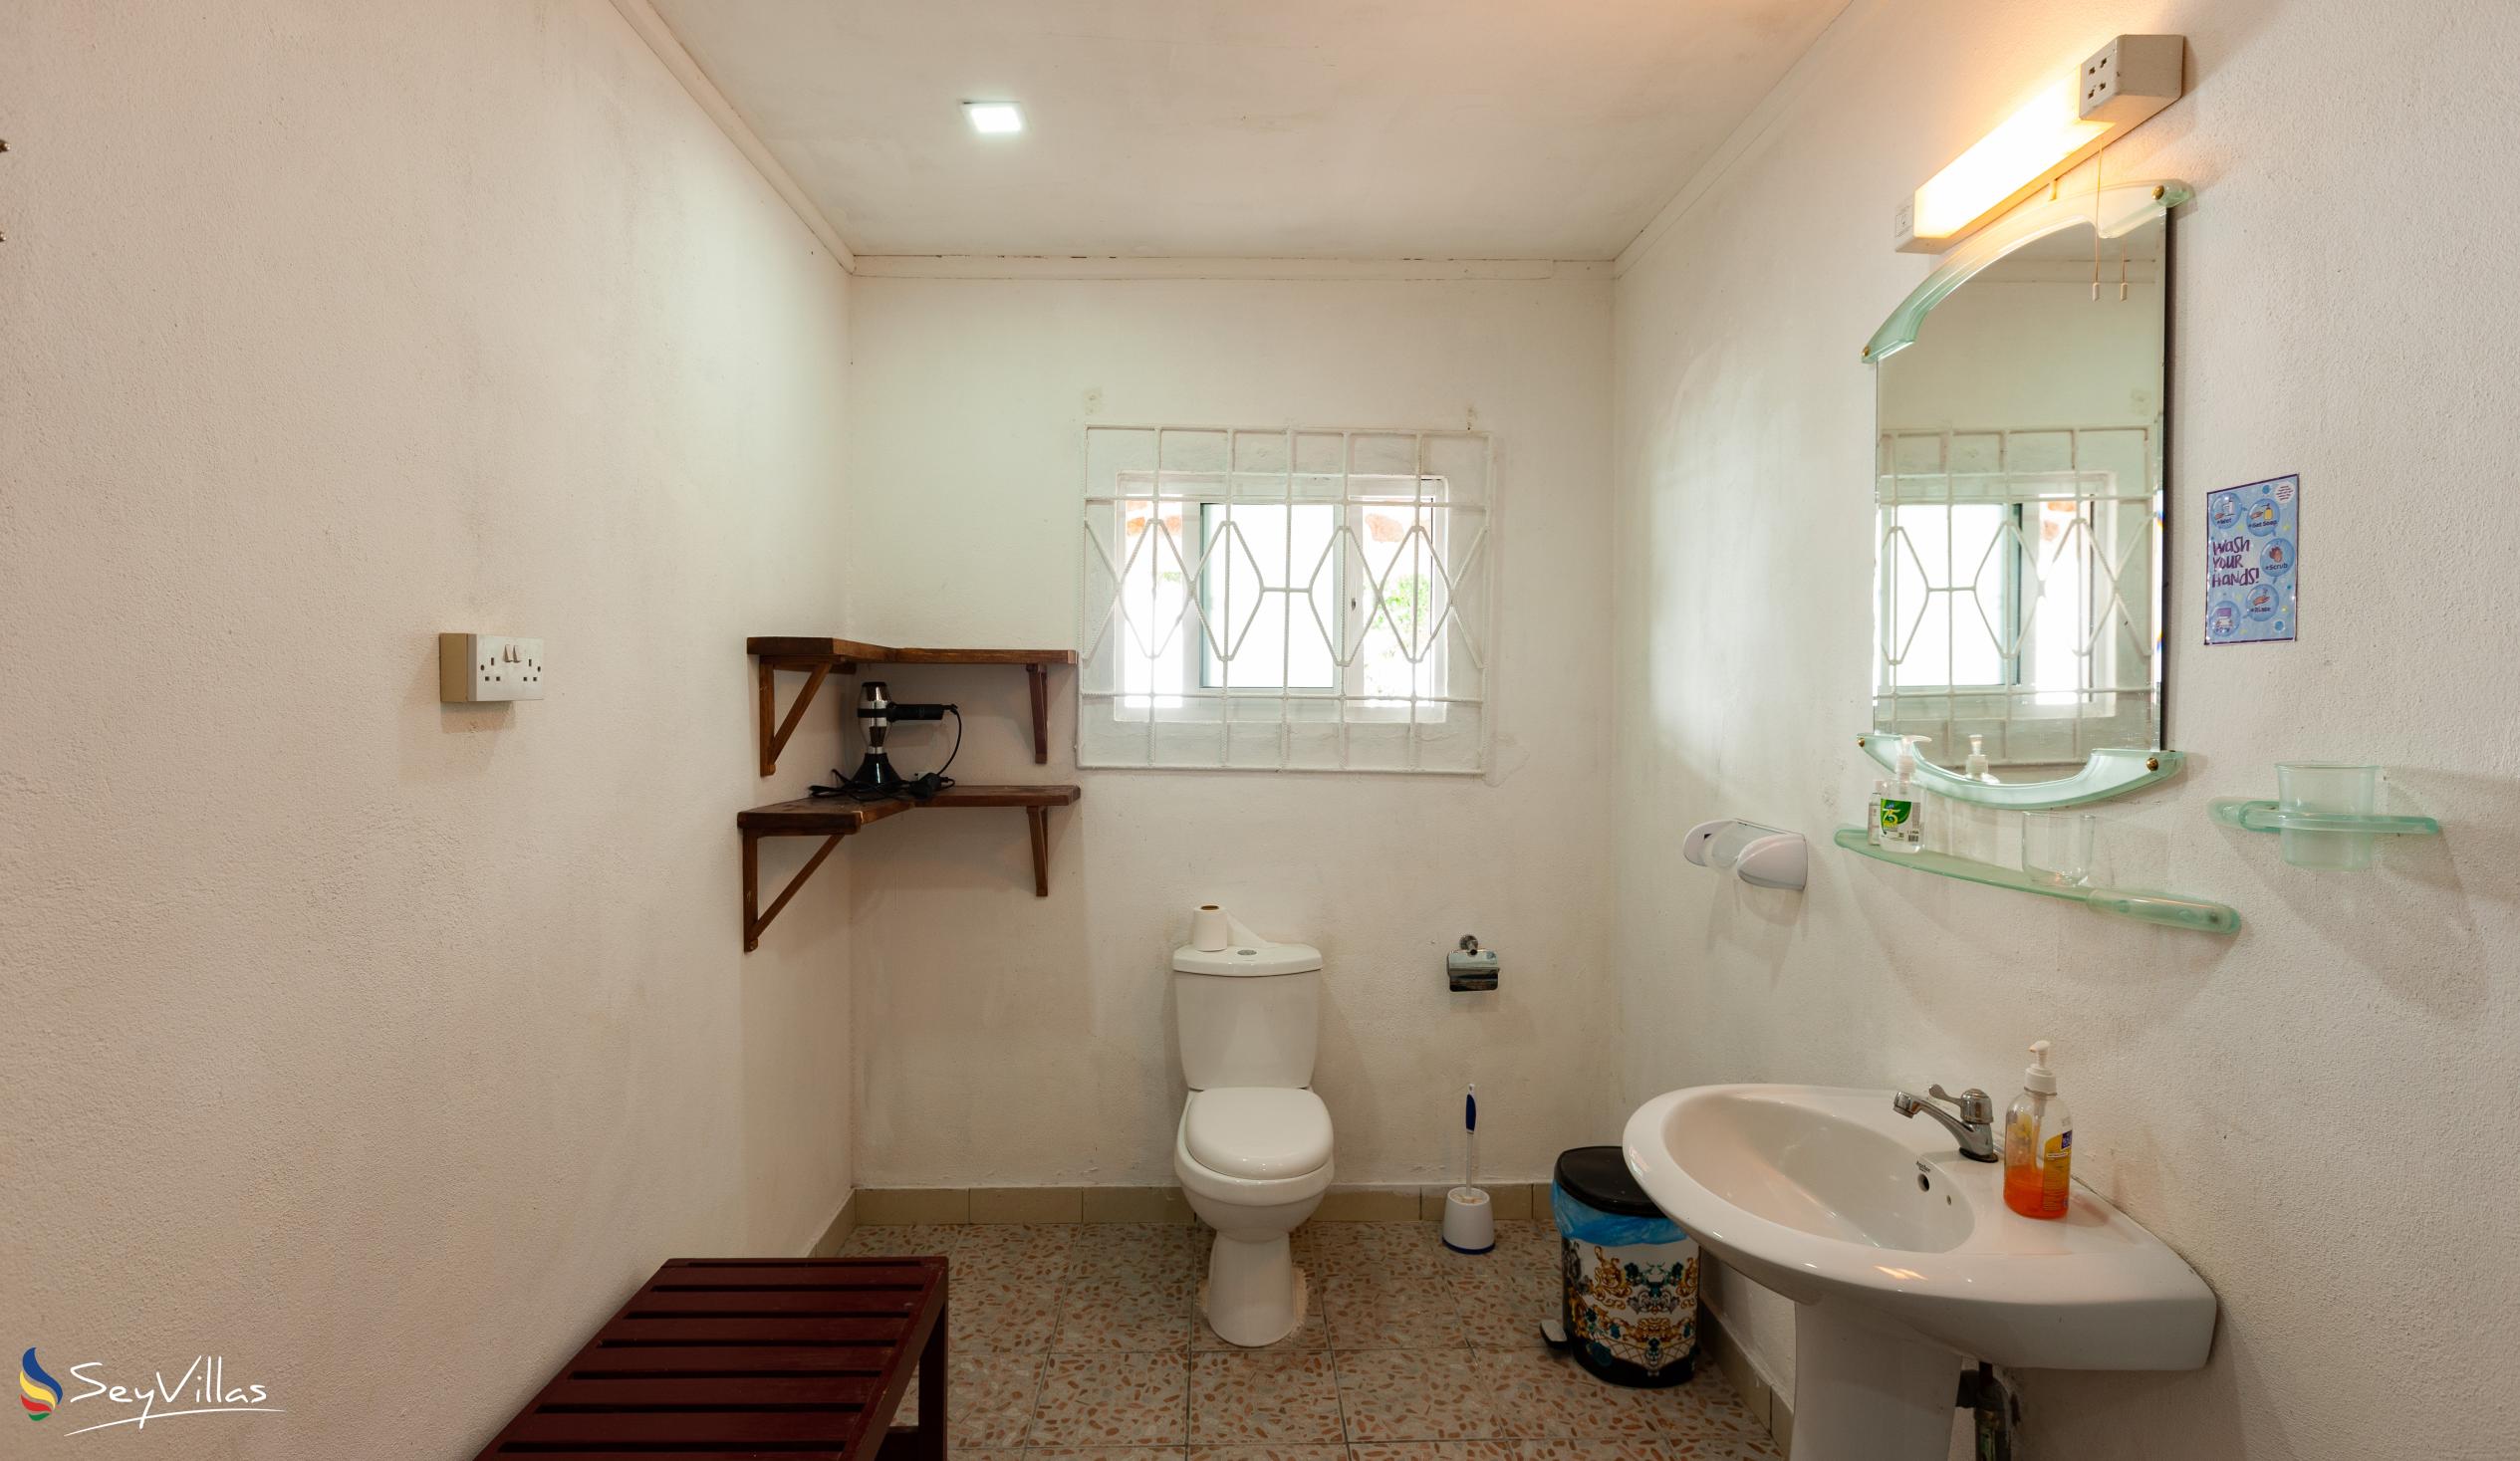 Foto 54: Maison du Soleil - Villa 2 chambres - Praslin (Seychelles)